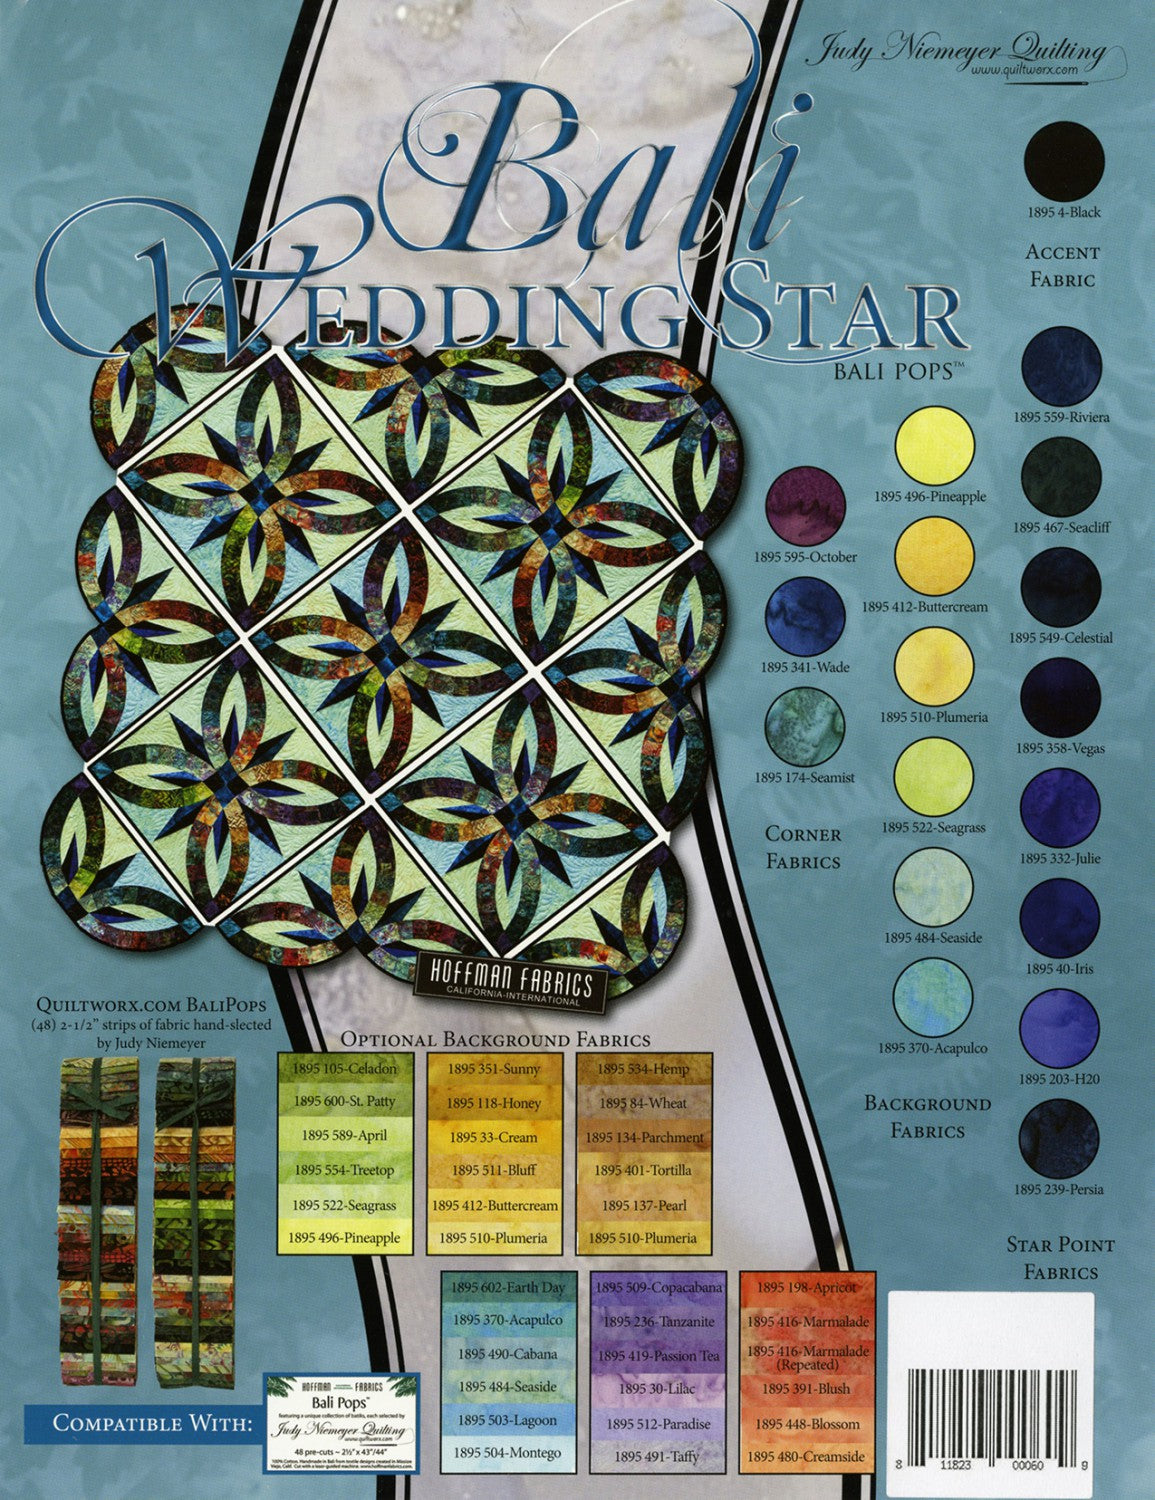 Bali Wedding Star 2014 Foundation Paper Pieced Quilt Pattern by Judy Niemeyer of Quiltworx